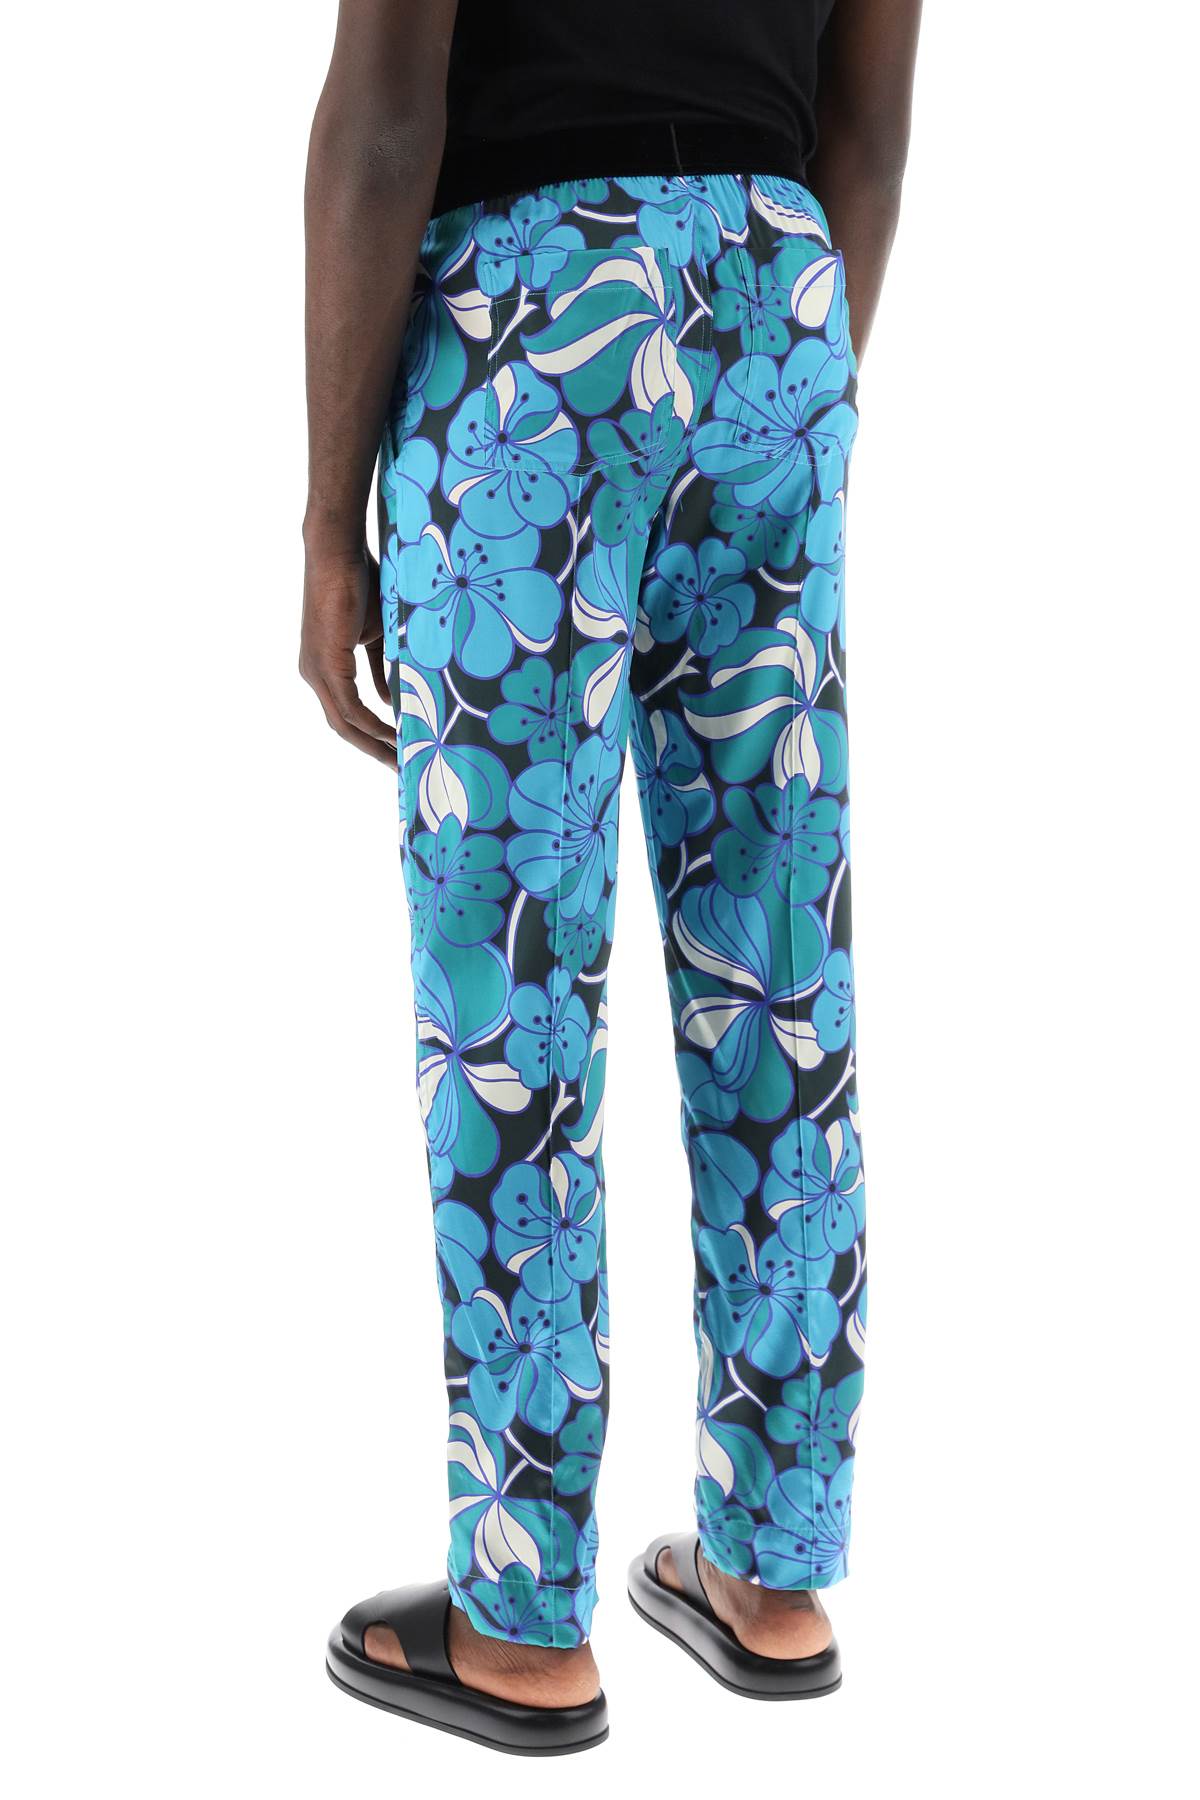 Tom ford pajama pants in floral silk-2